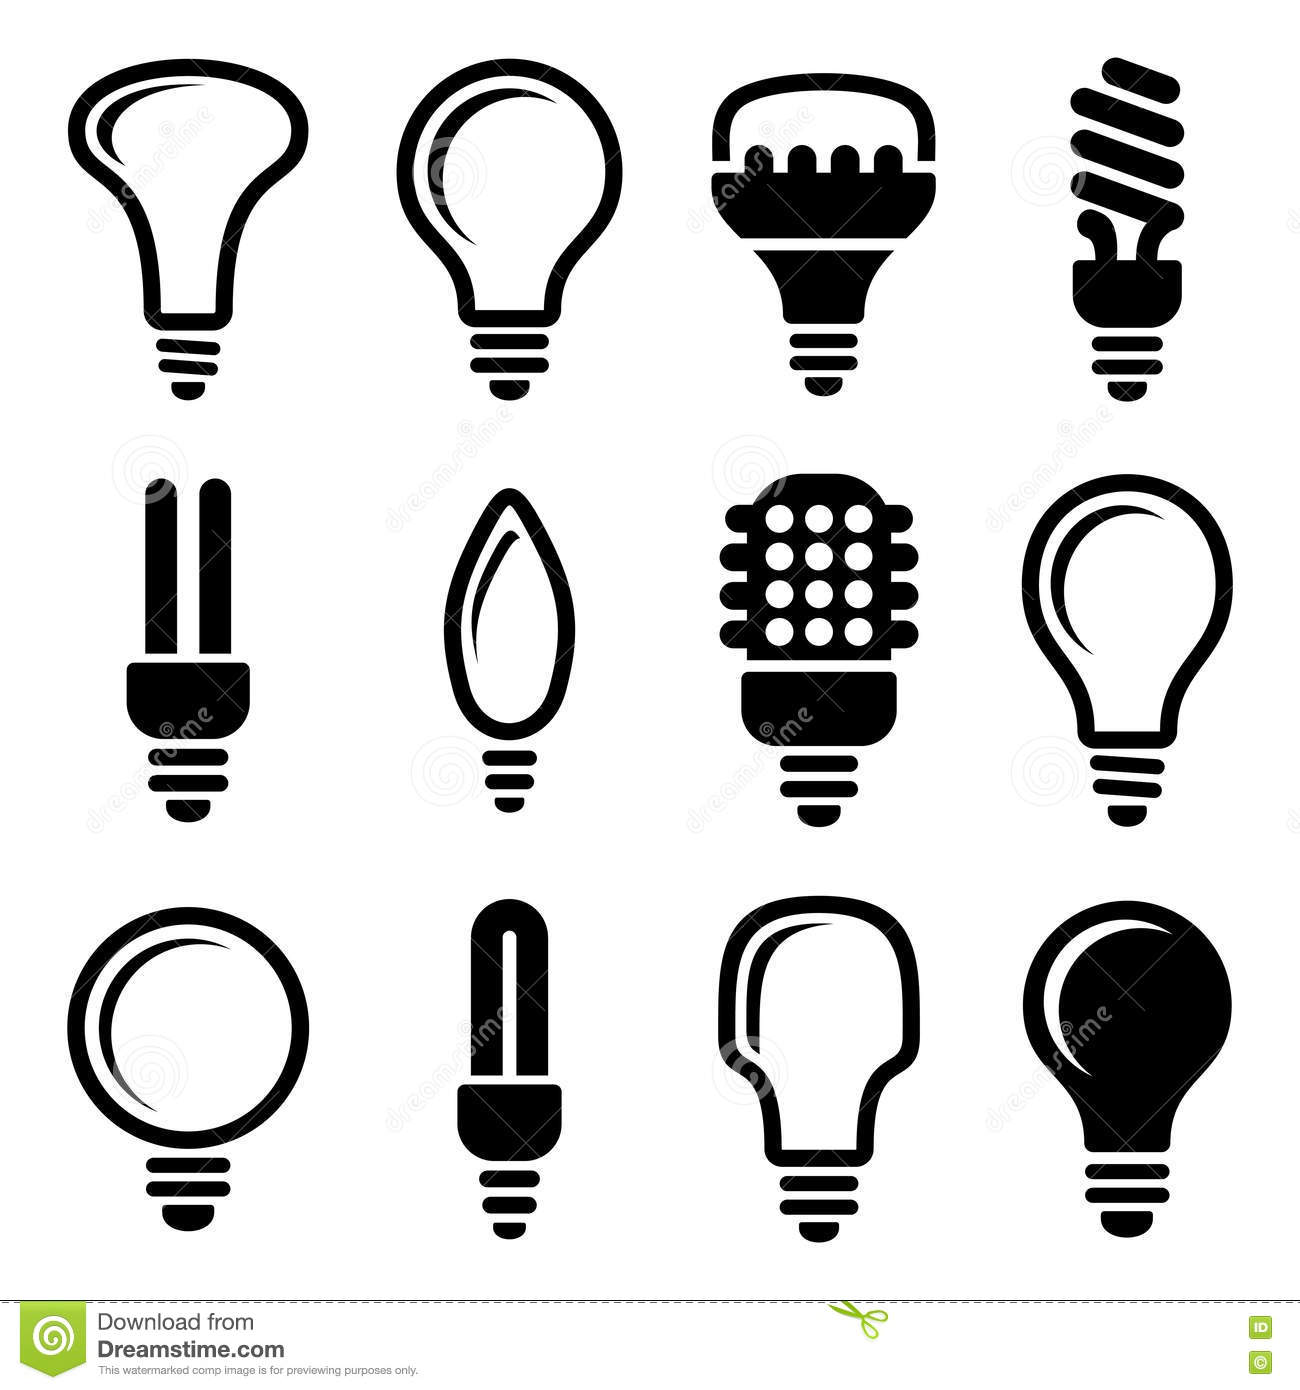 LED Light Bulb Icon